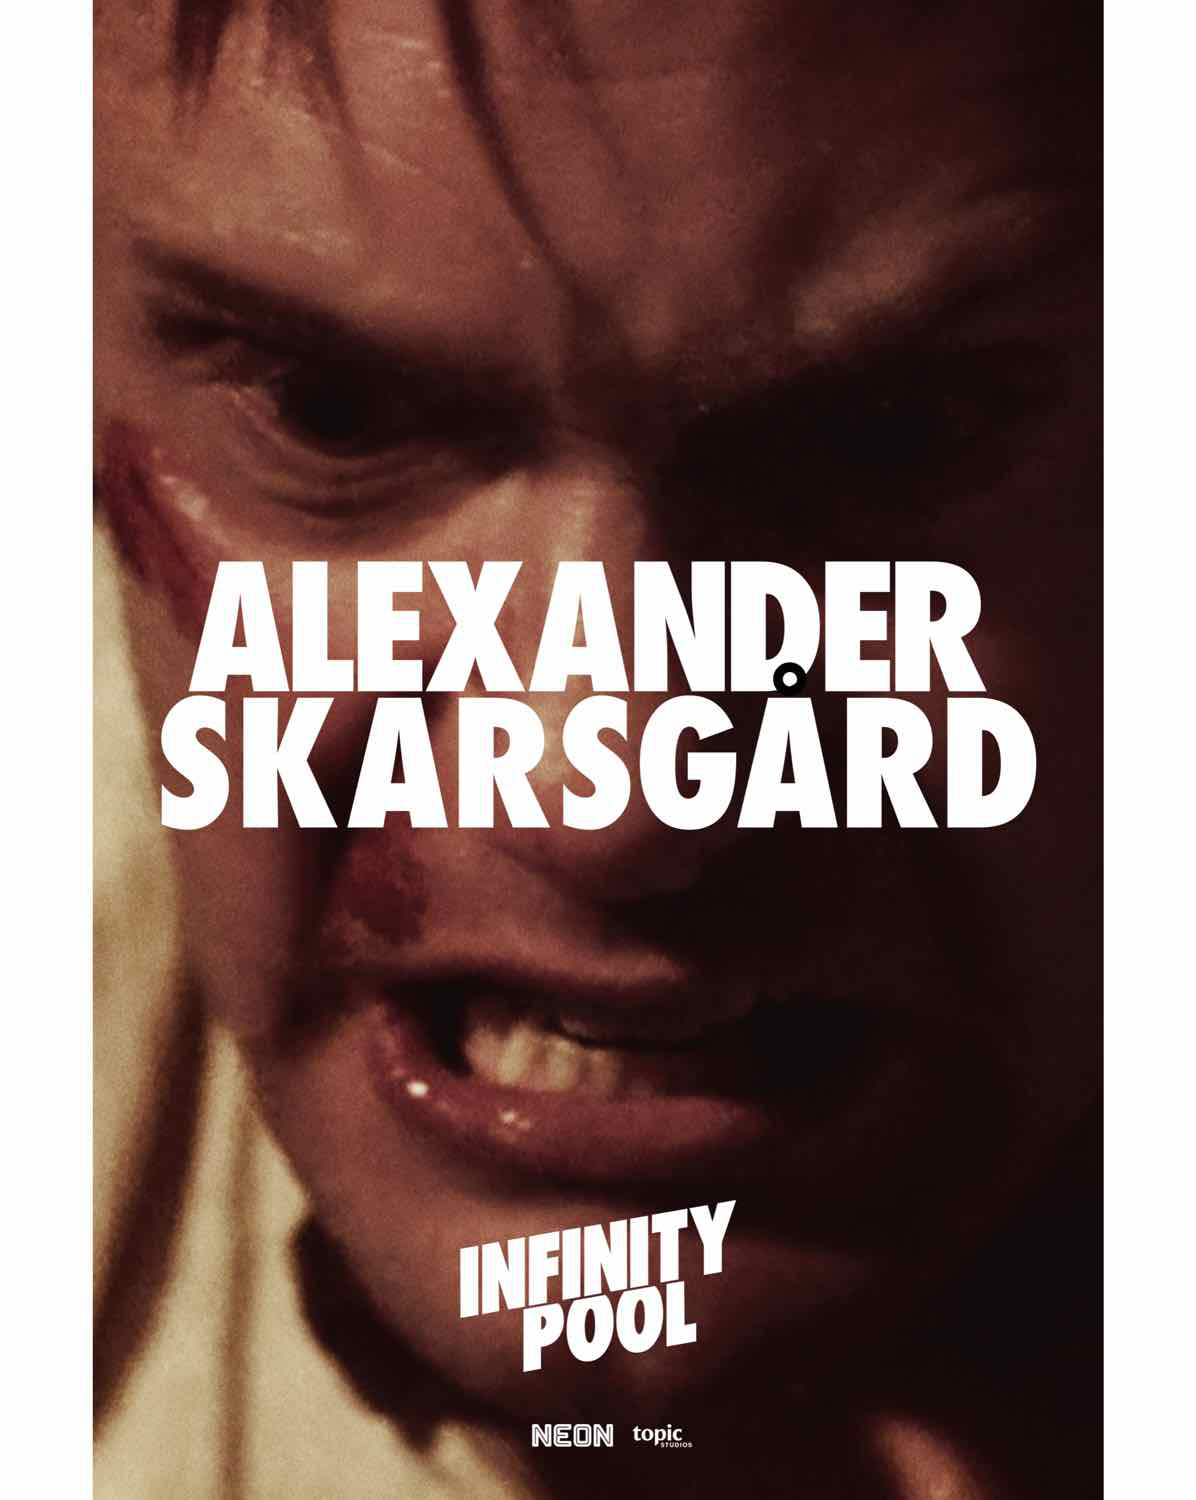 alexander skarsgard infinity pool-1